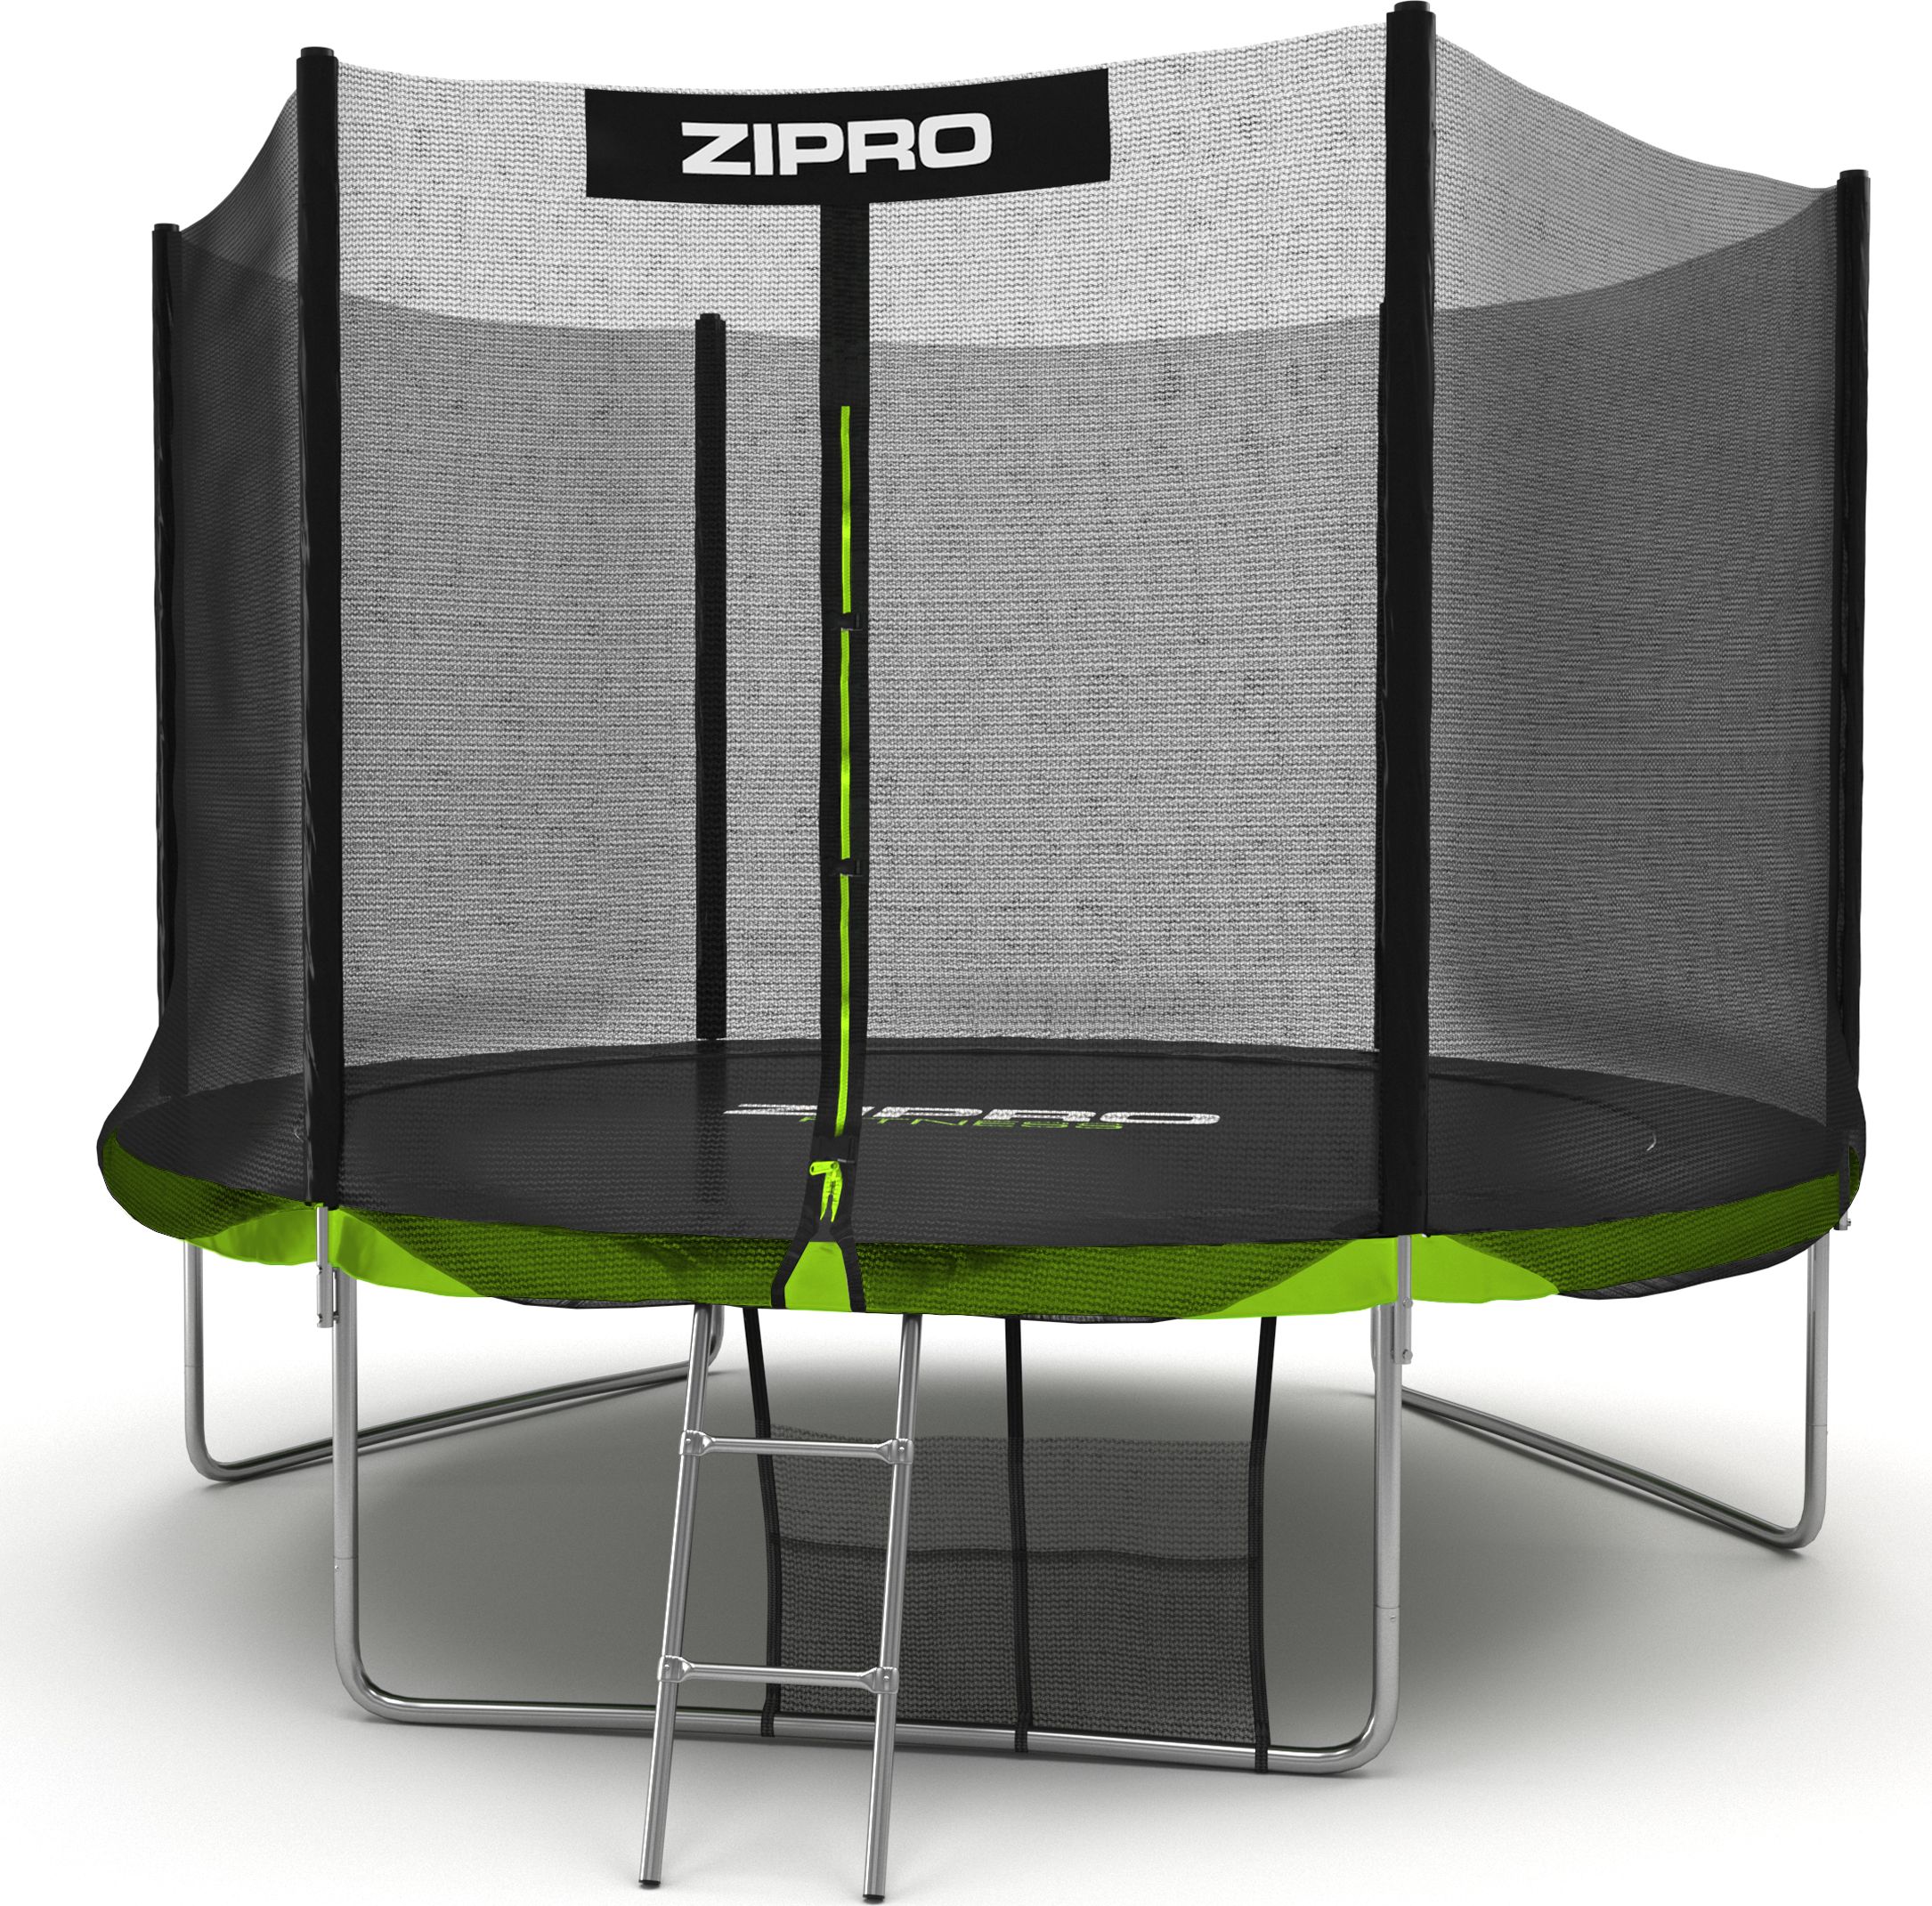 Zipro Garden trampoline with external net 10FT 312cm + shoe bag FREE! Batuts